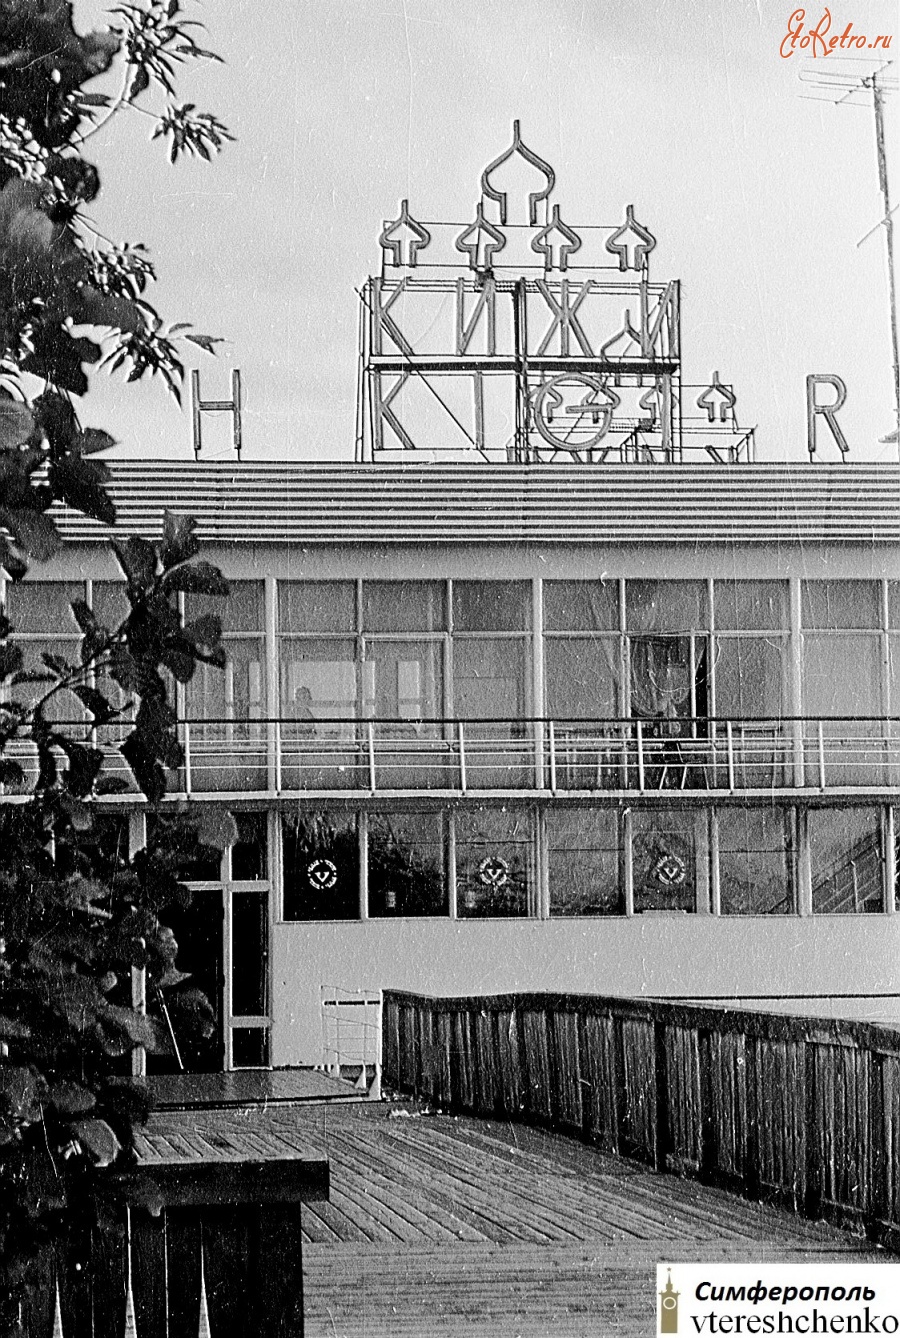 Республика Карелия - Республика Карелия. Кижи. Ресторан – 1975